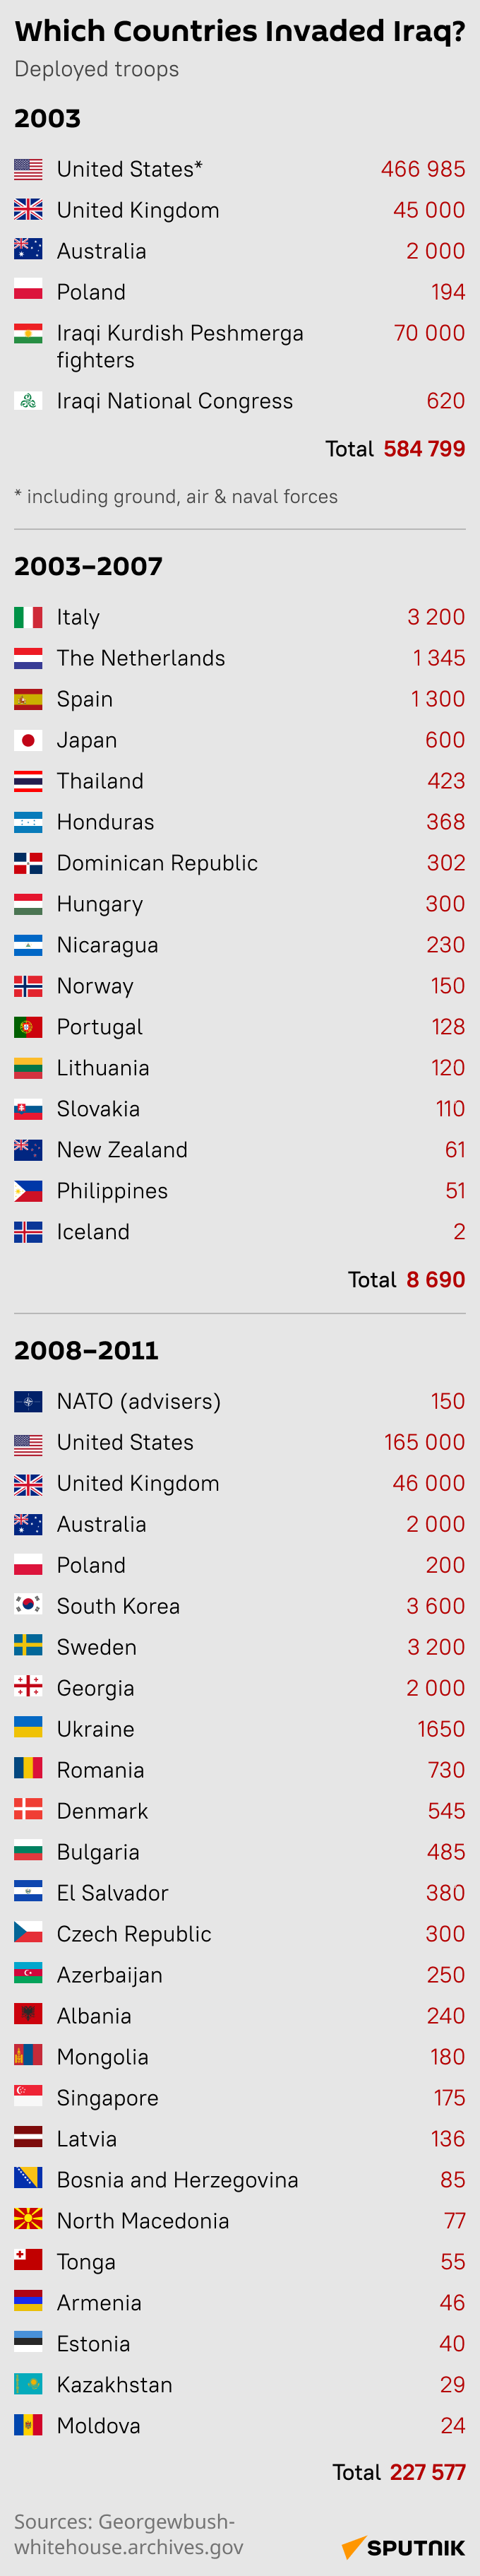 Which Countries Invaded Iraq? (mob) - Sputnik International